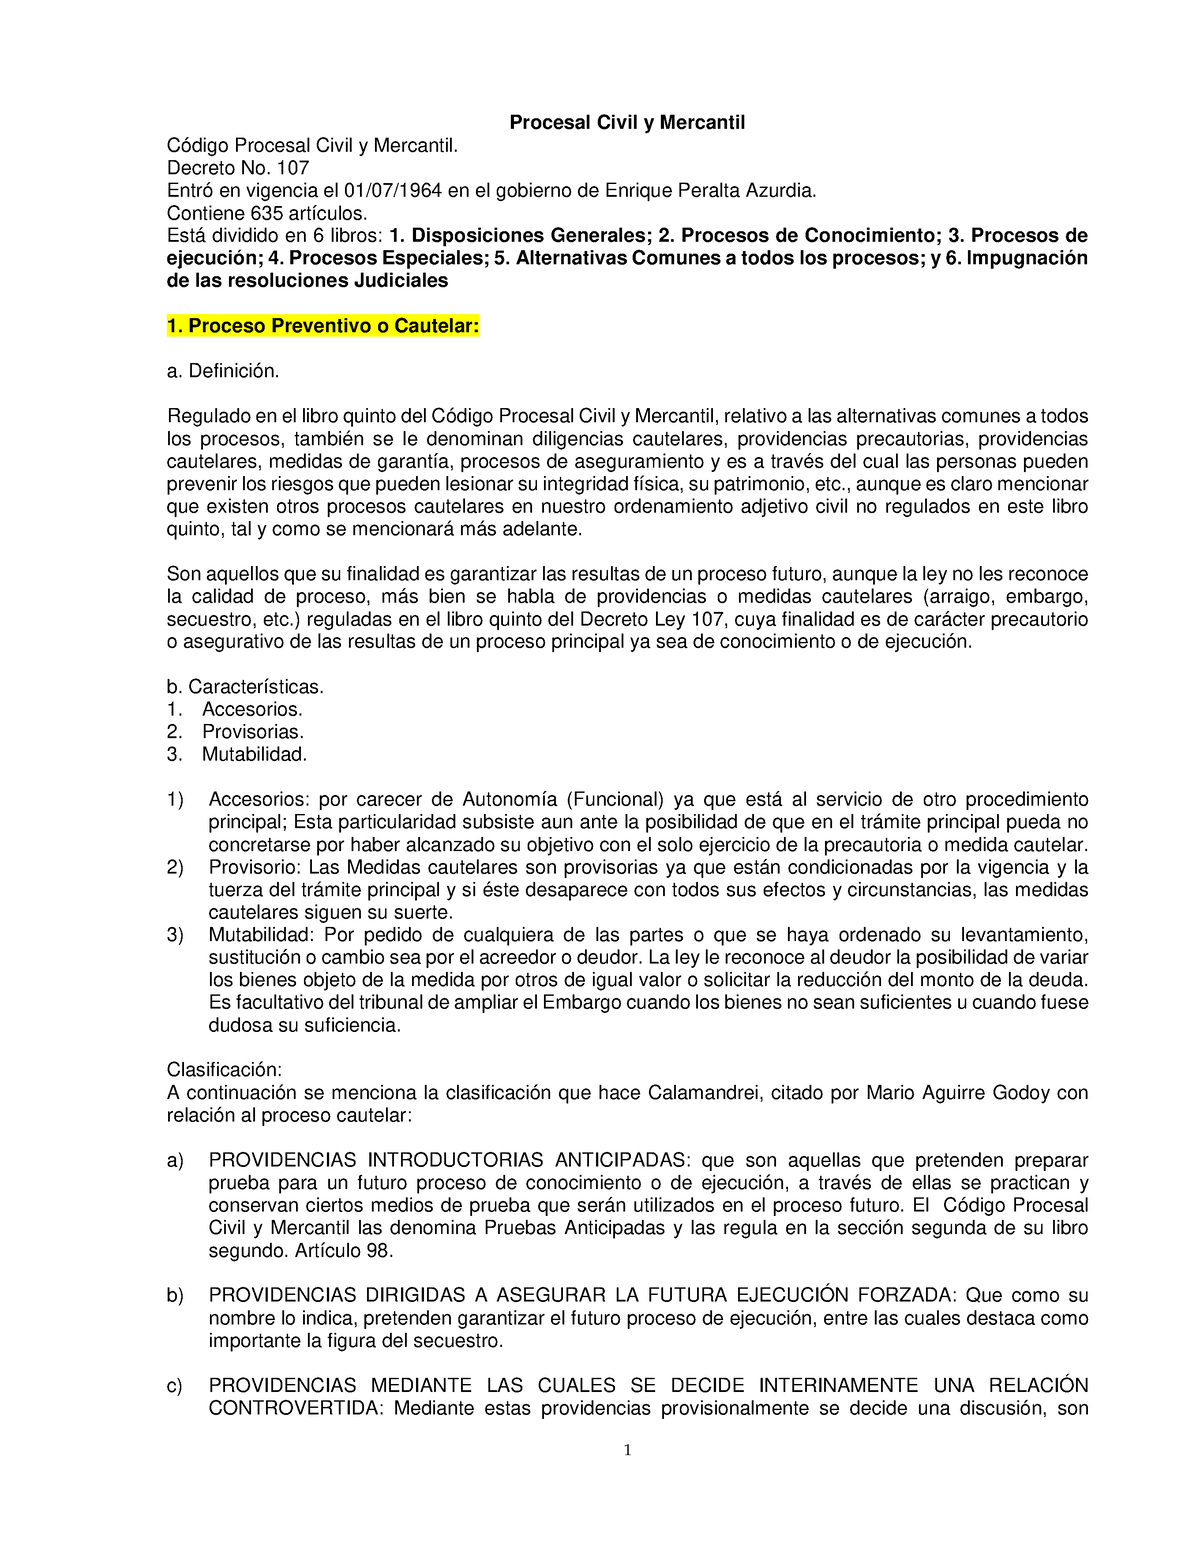 Derecho Procesal Civil Y Mercantil En Guatemala Procesal Civil Y